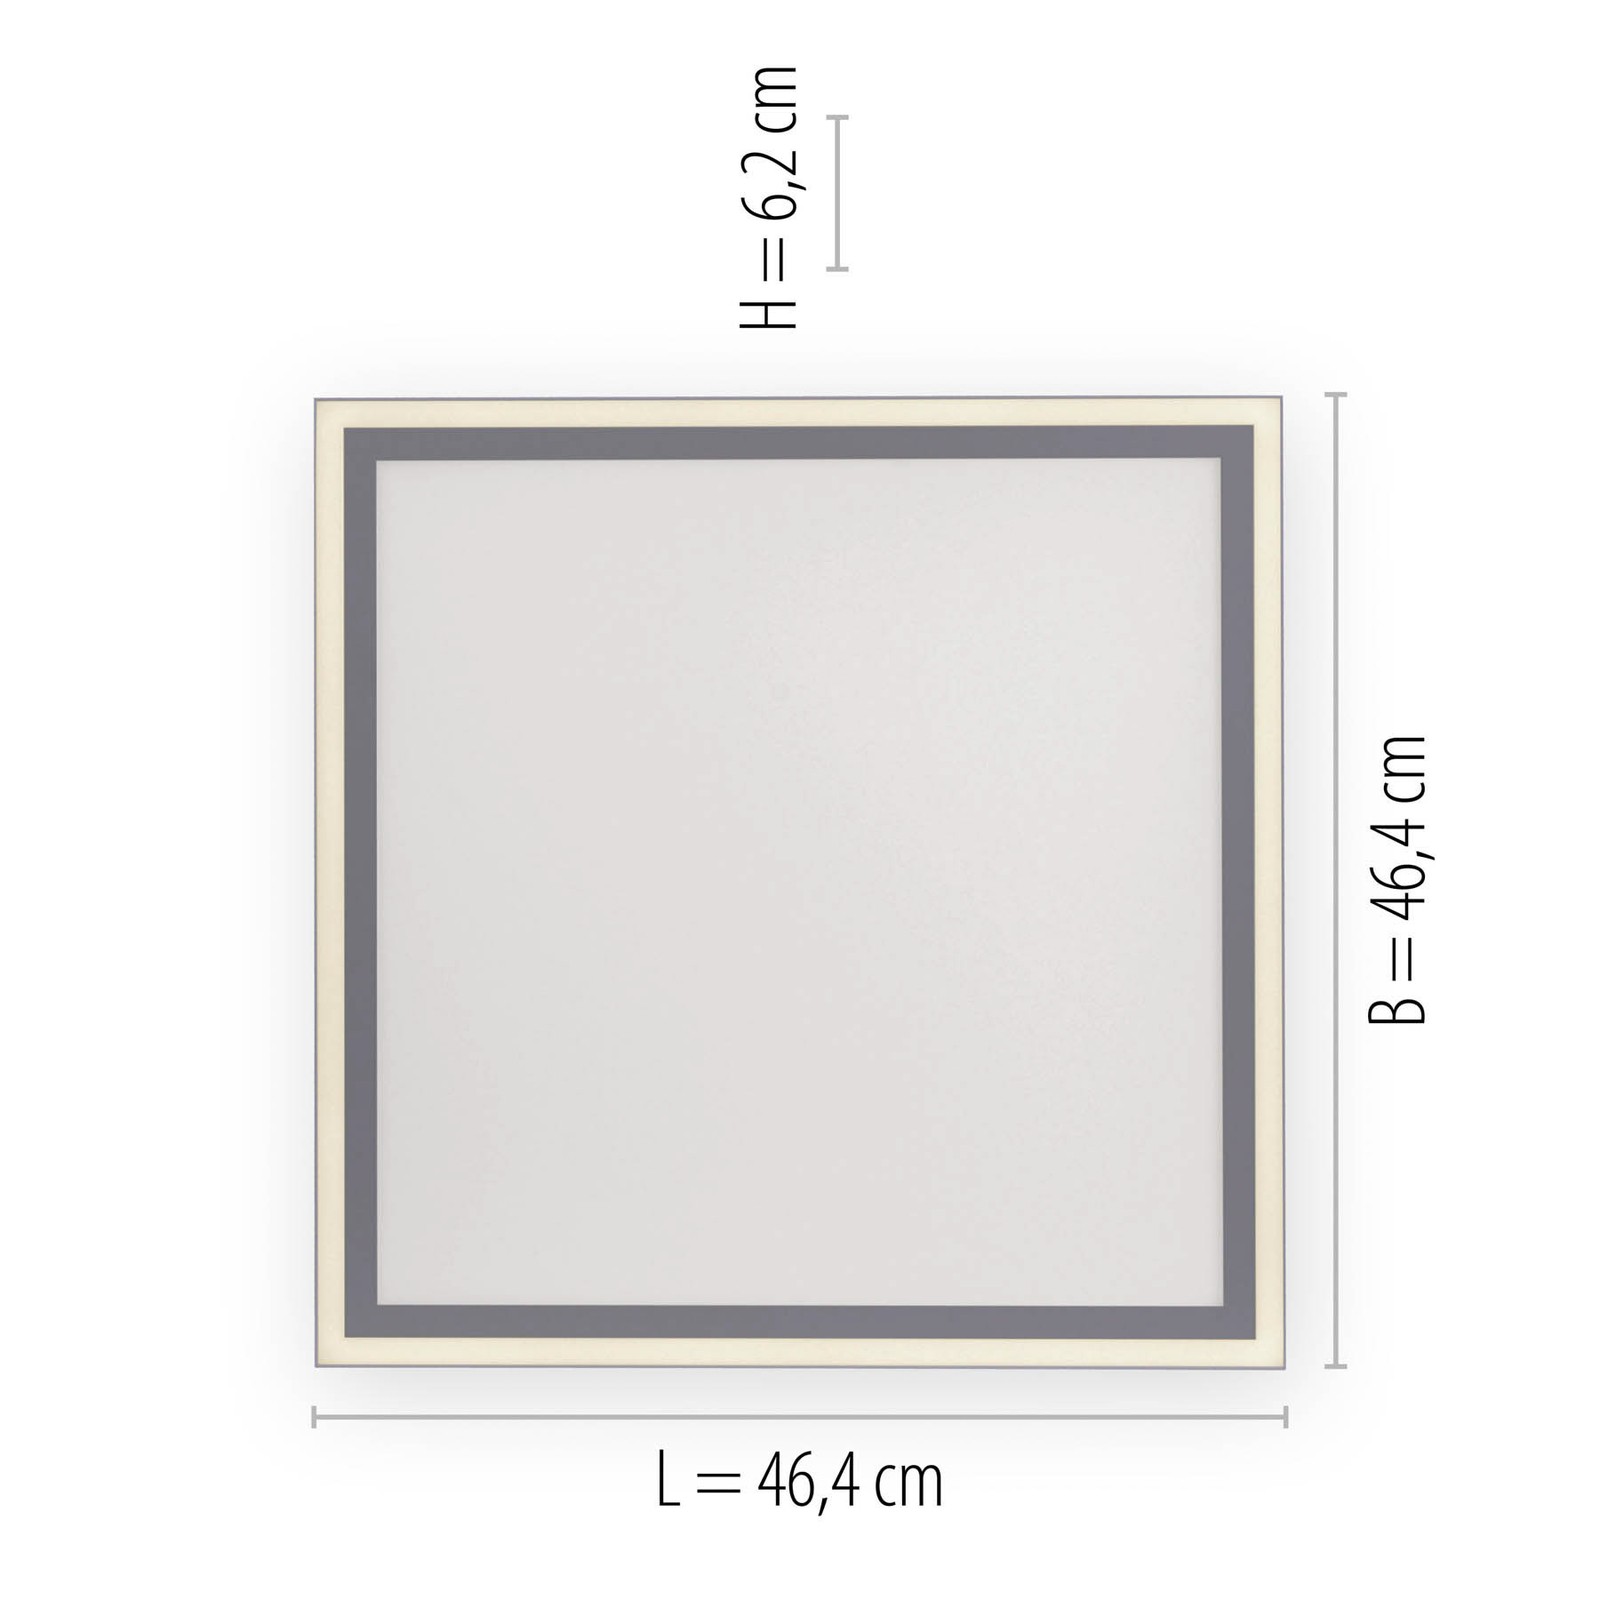 Edging-LED-kattovalaisin, tunable white, 46x46 cm